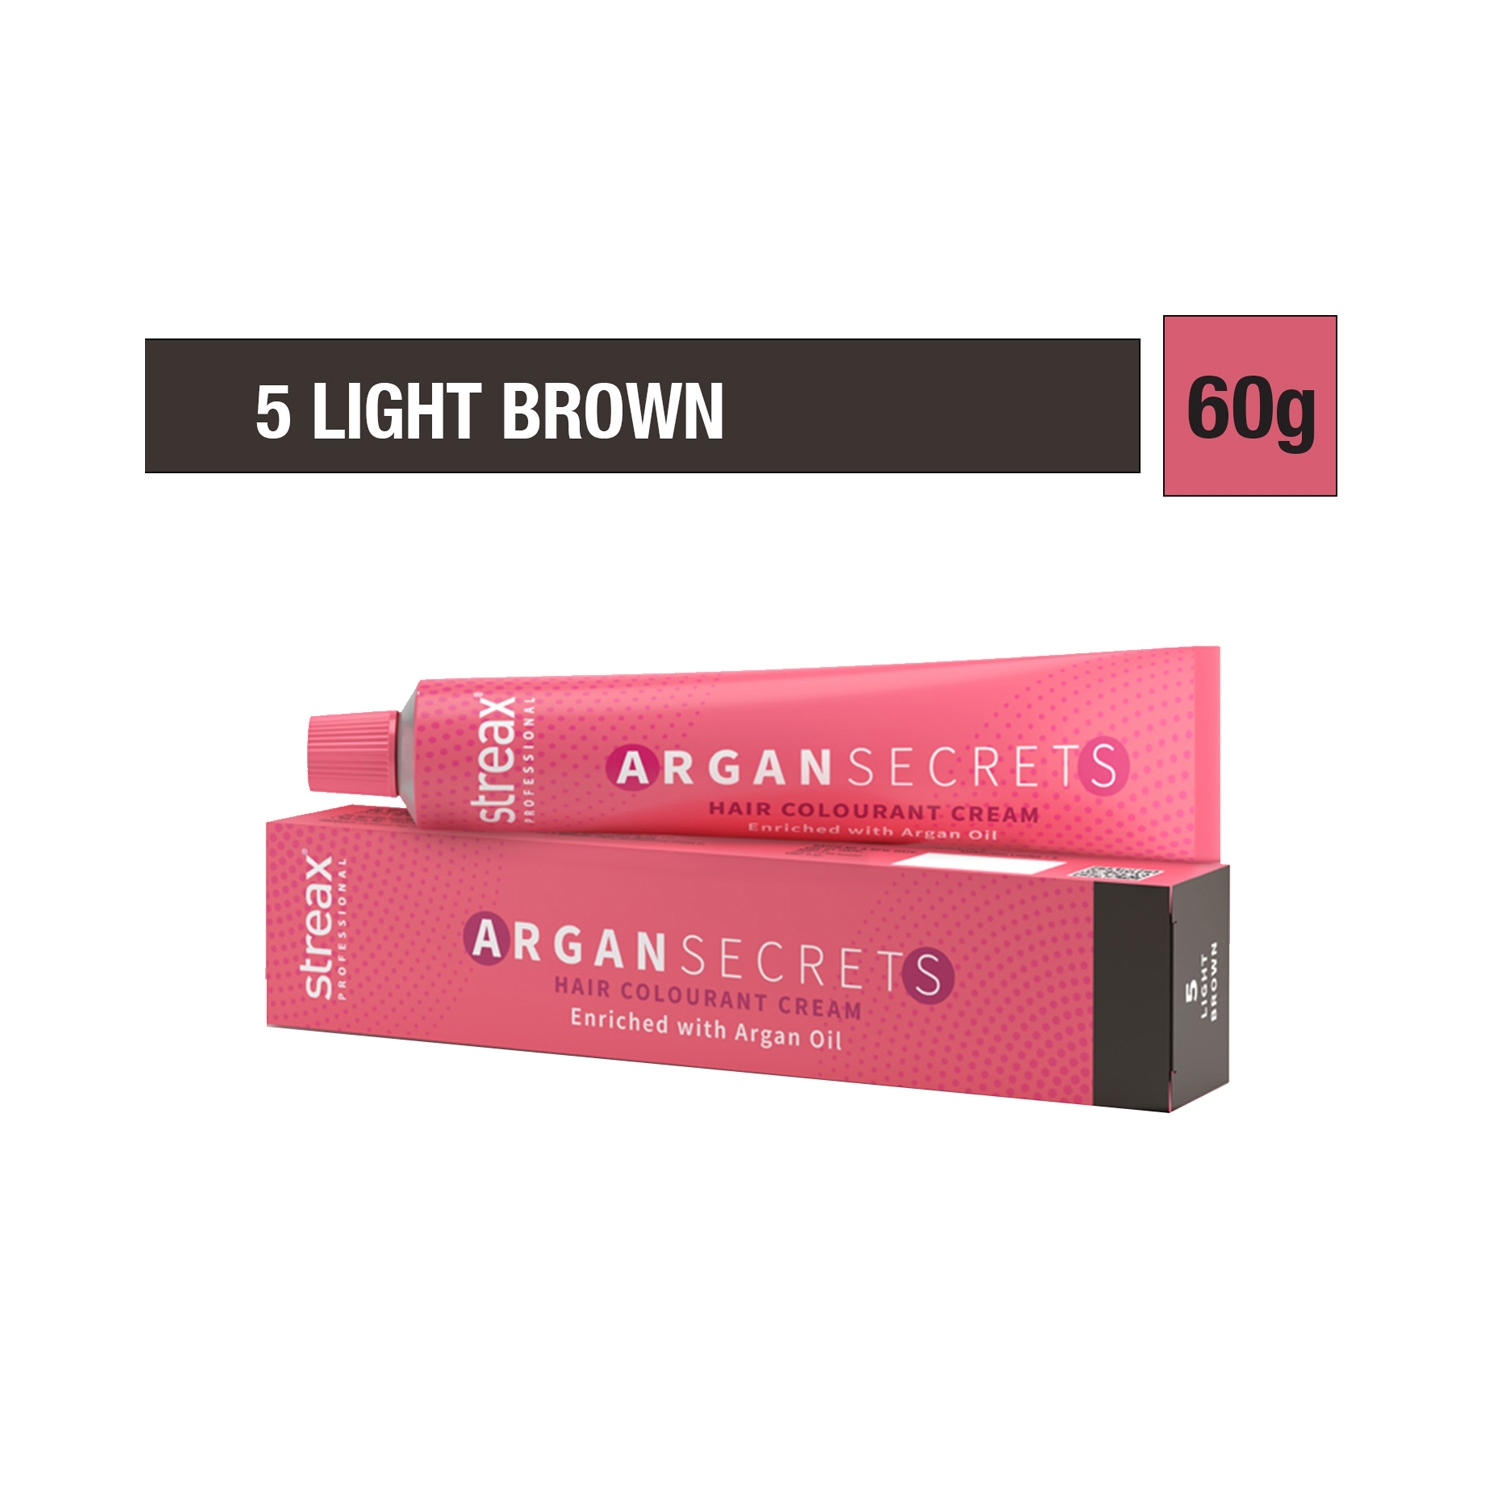 Streax Professional | Streax Professional Argan Secrets Hair Colorant Cream - 5 Light Brown (60g)